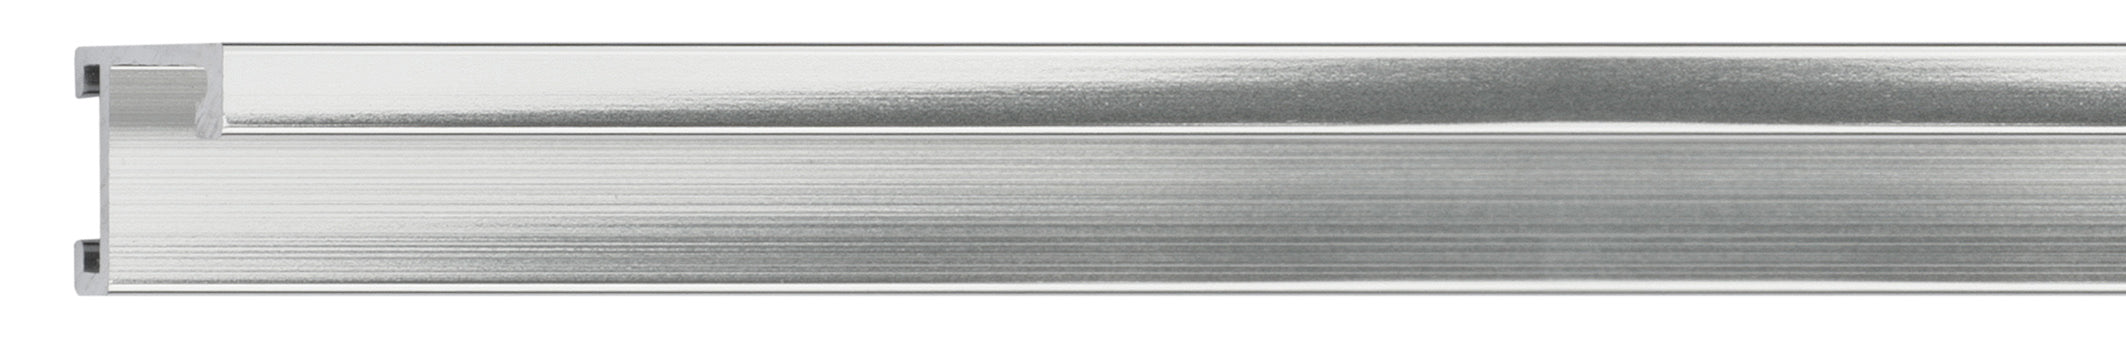 Nielsen Aluminium Metal Frame Profile 273 P273 - 2273003 Polished Silver